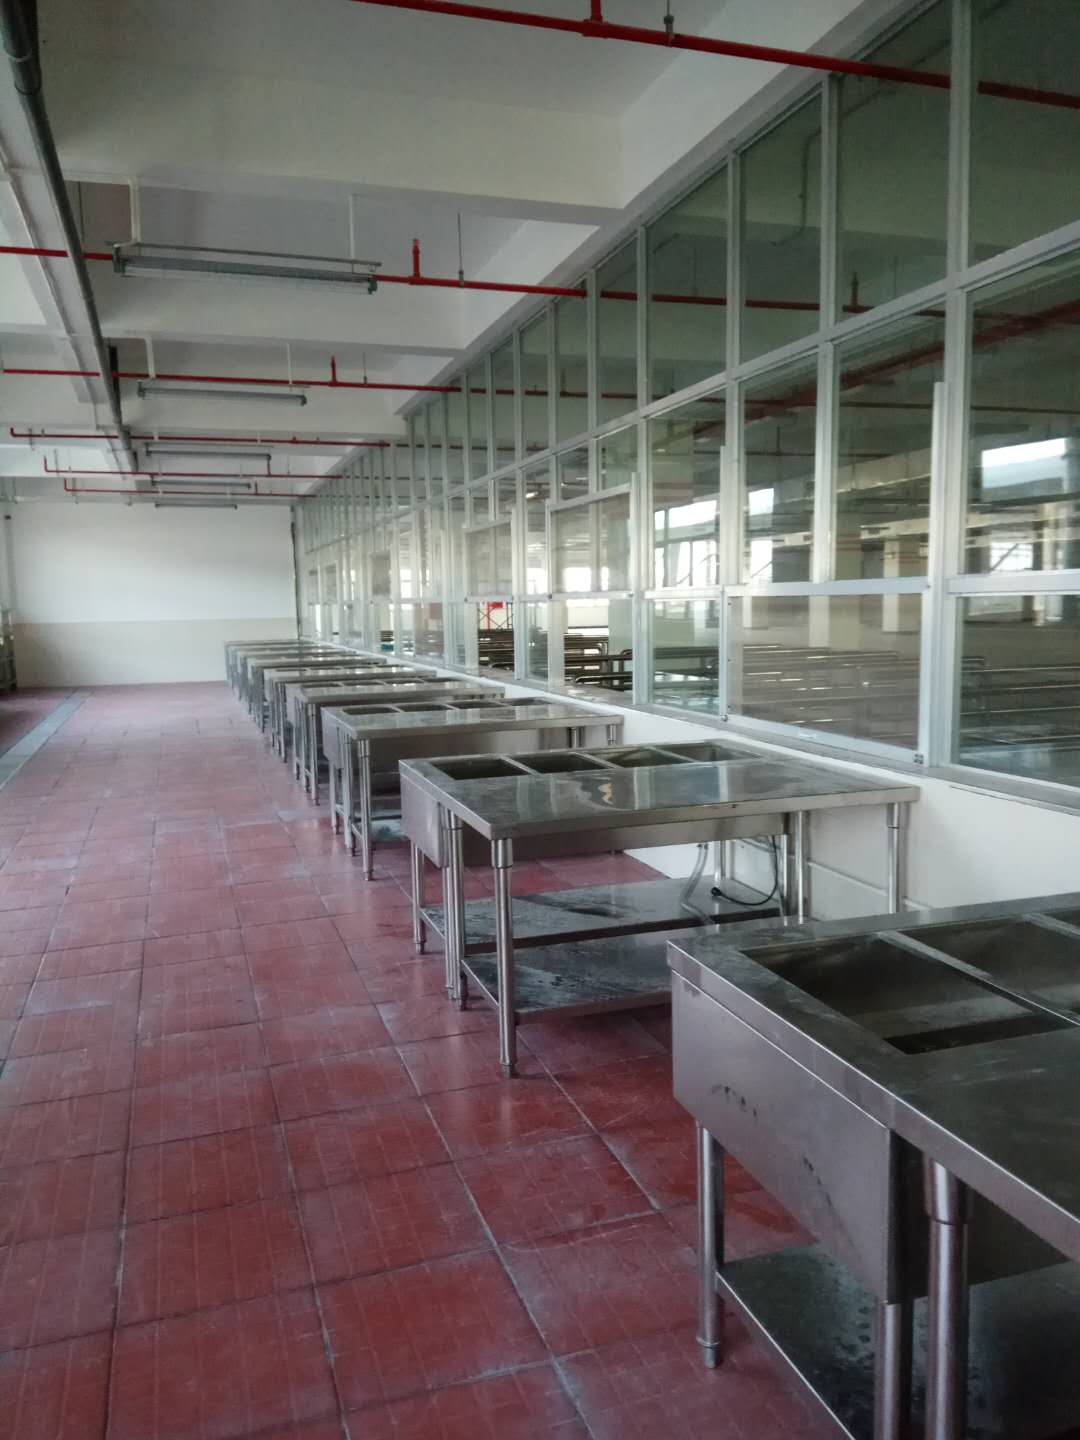 Hospital School Kitchen Project